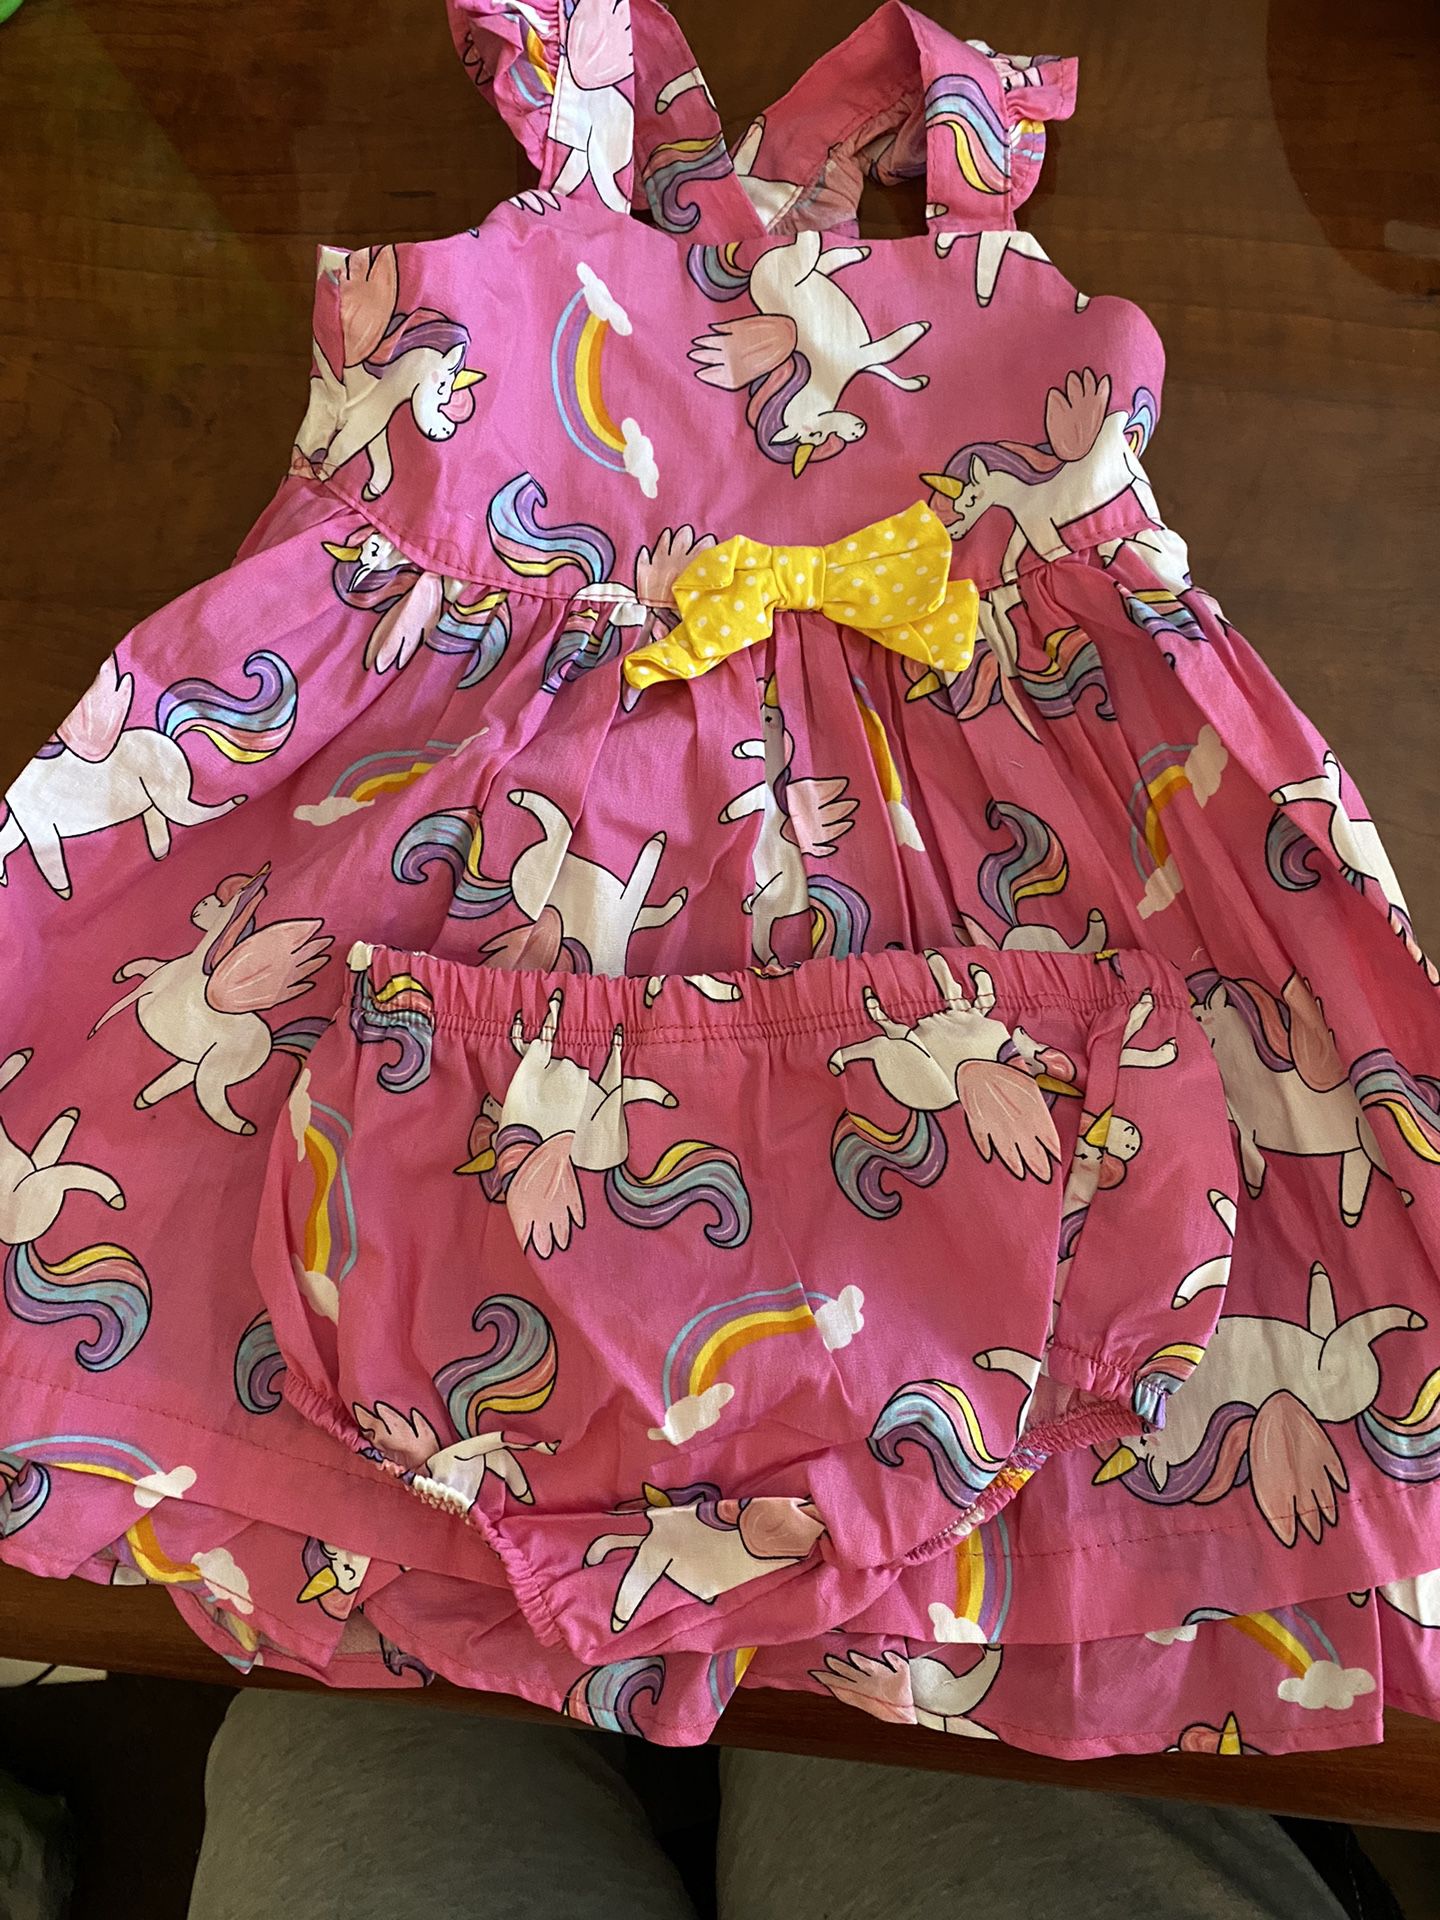 Unicorn Dress 24mo (1T-2T) $5